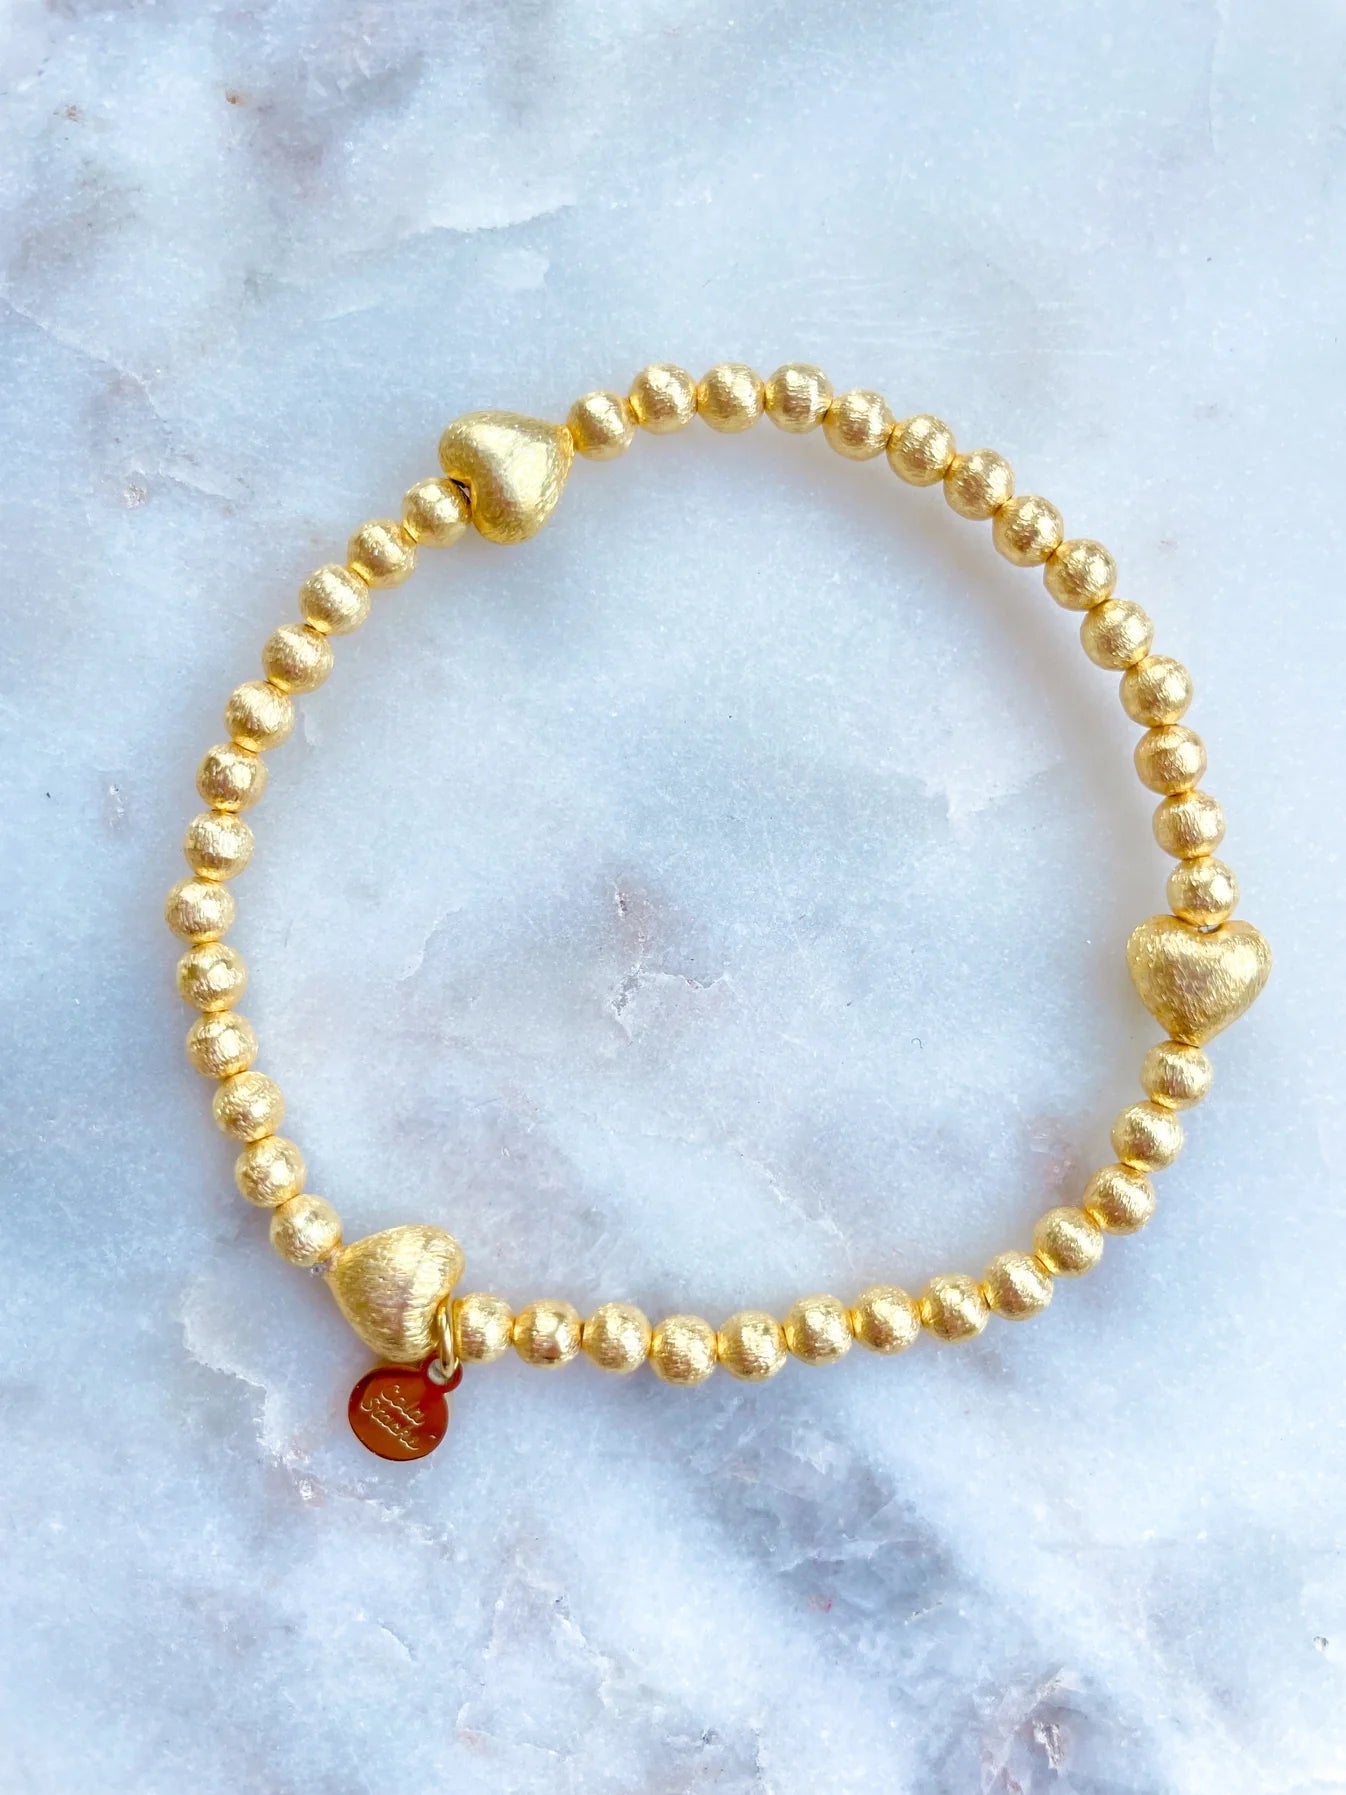 Pure 999 24K Yellow Gold Women Lucky Lotus Bud Beads Bracelet 2.4-2.6g  6.3in L | eBay